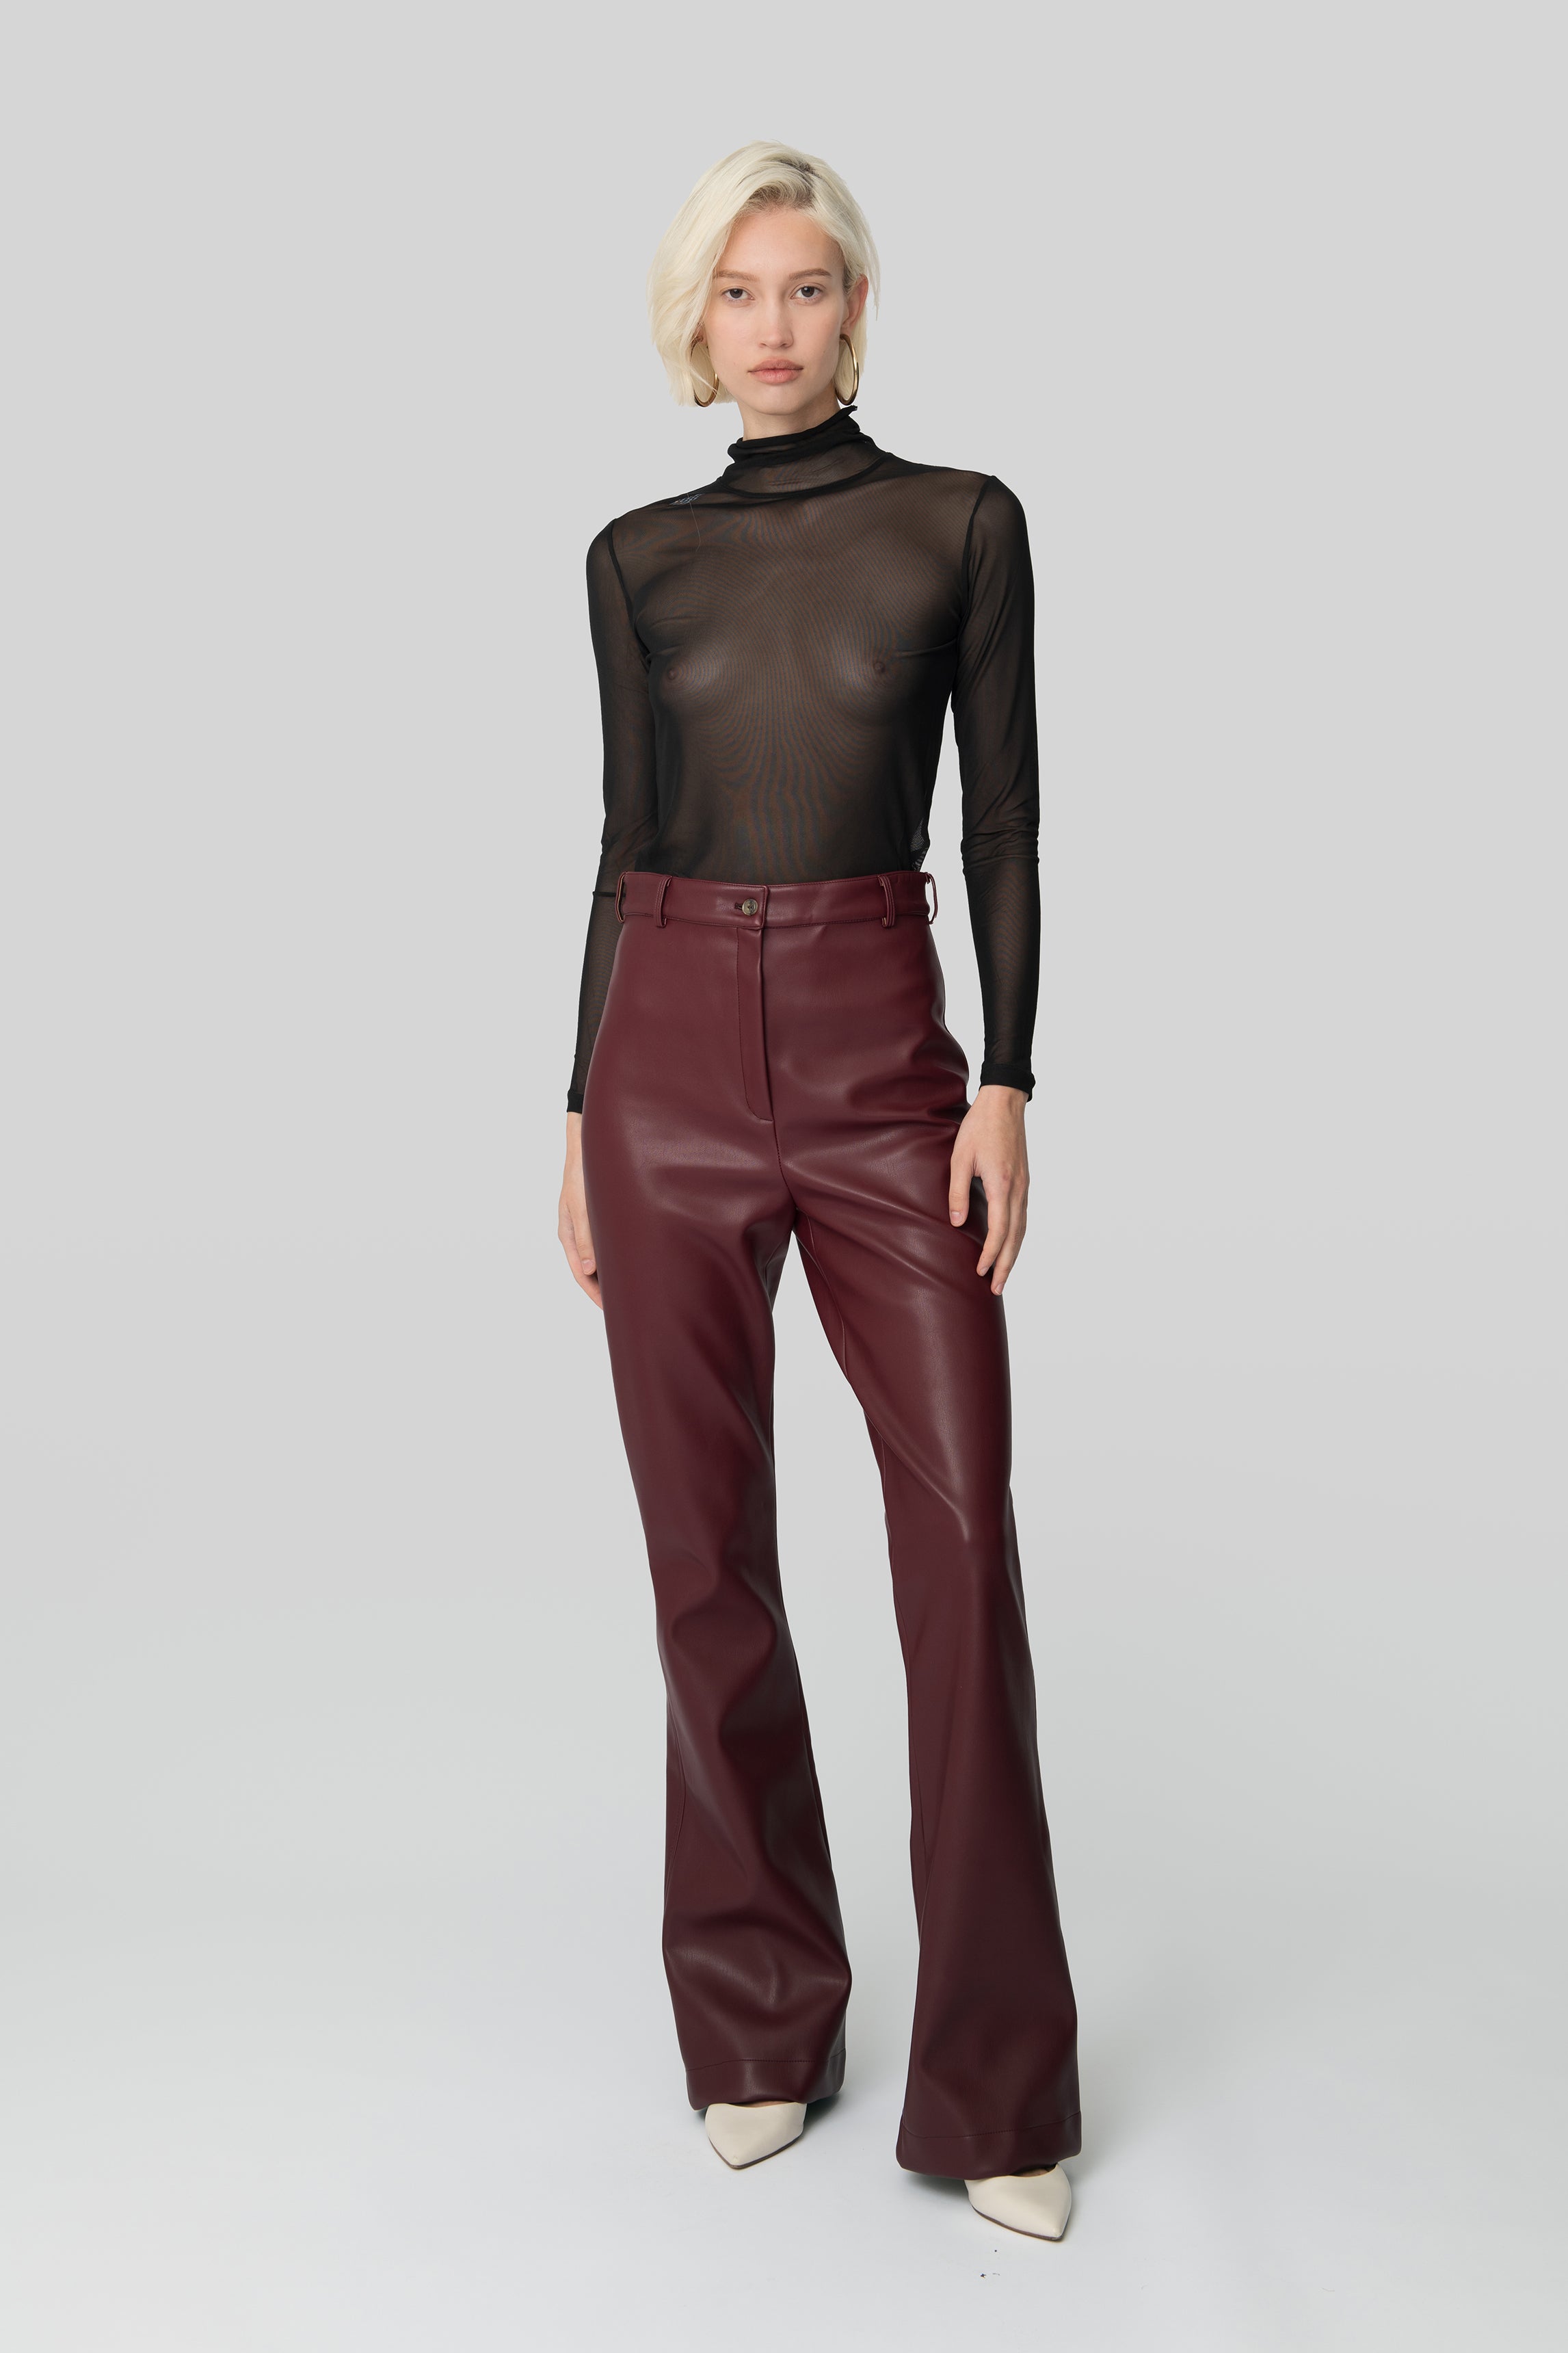 The Burgundy Leather Georgia Pants